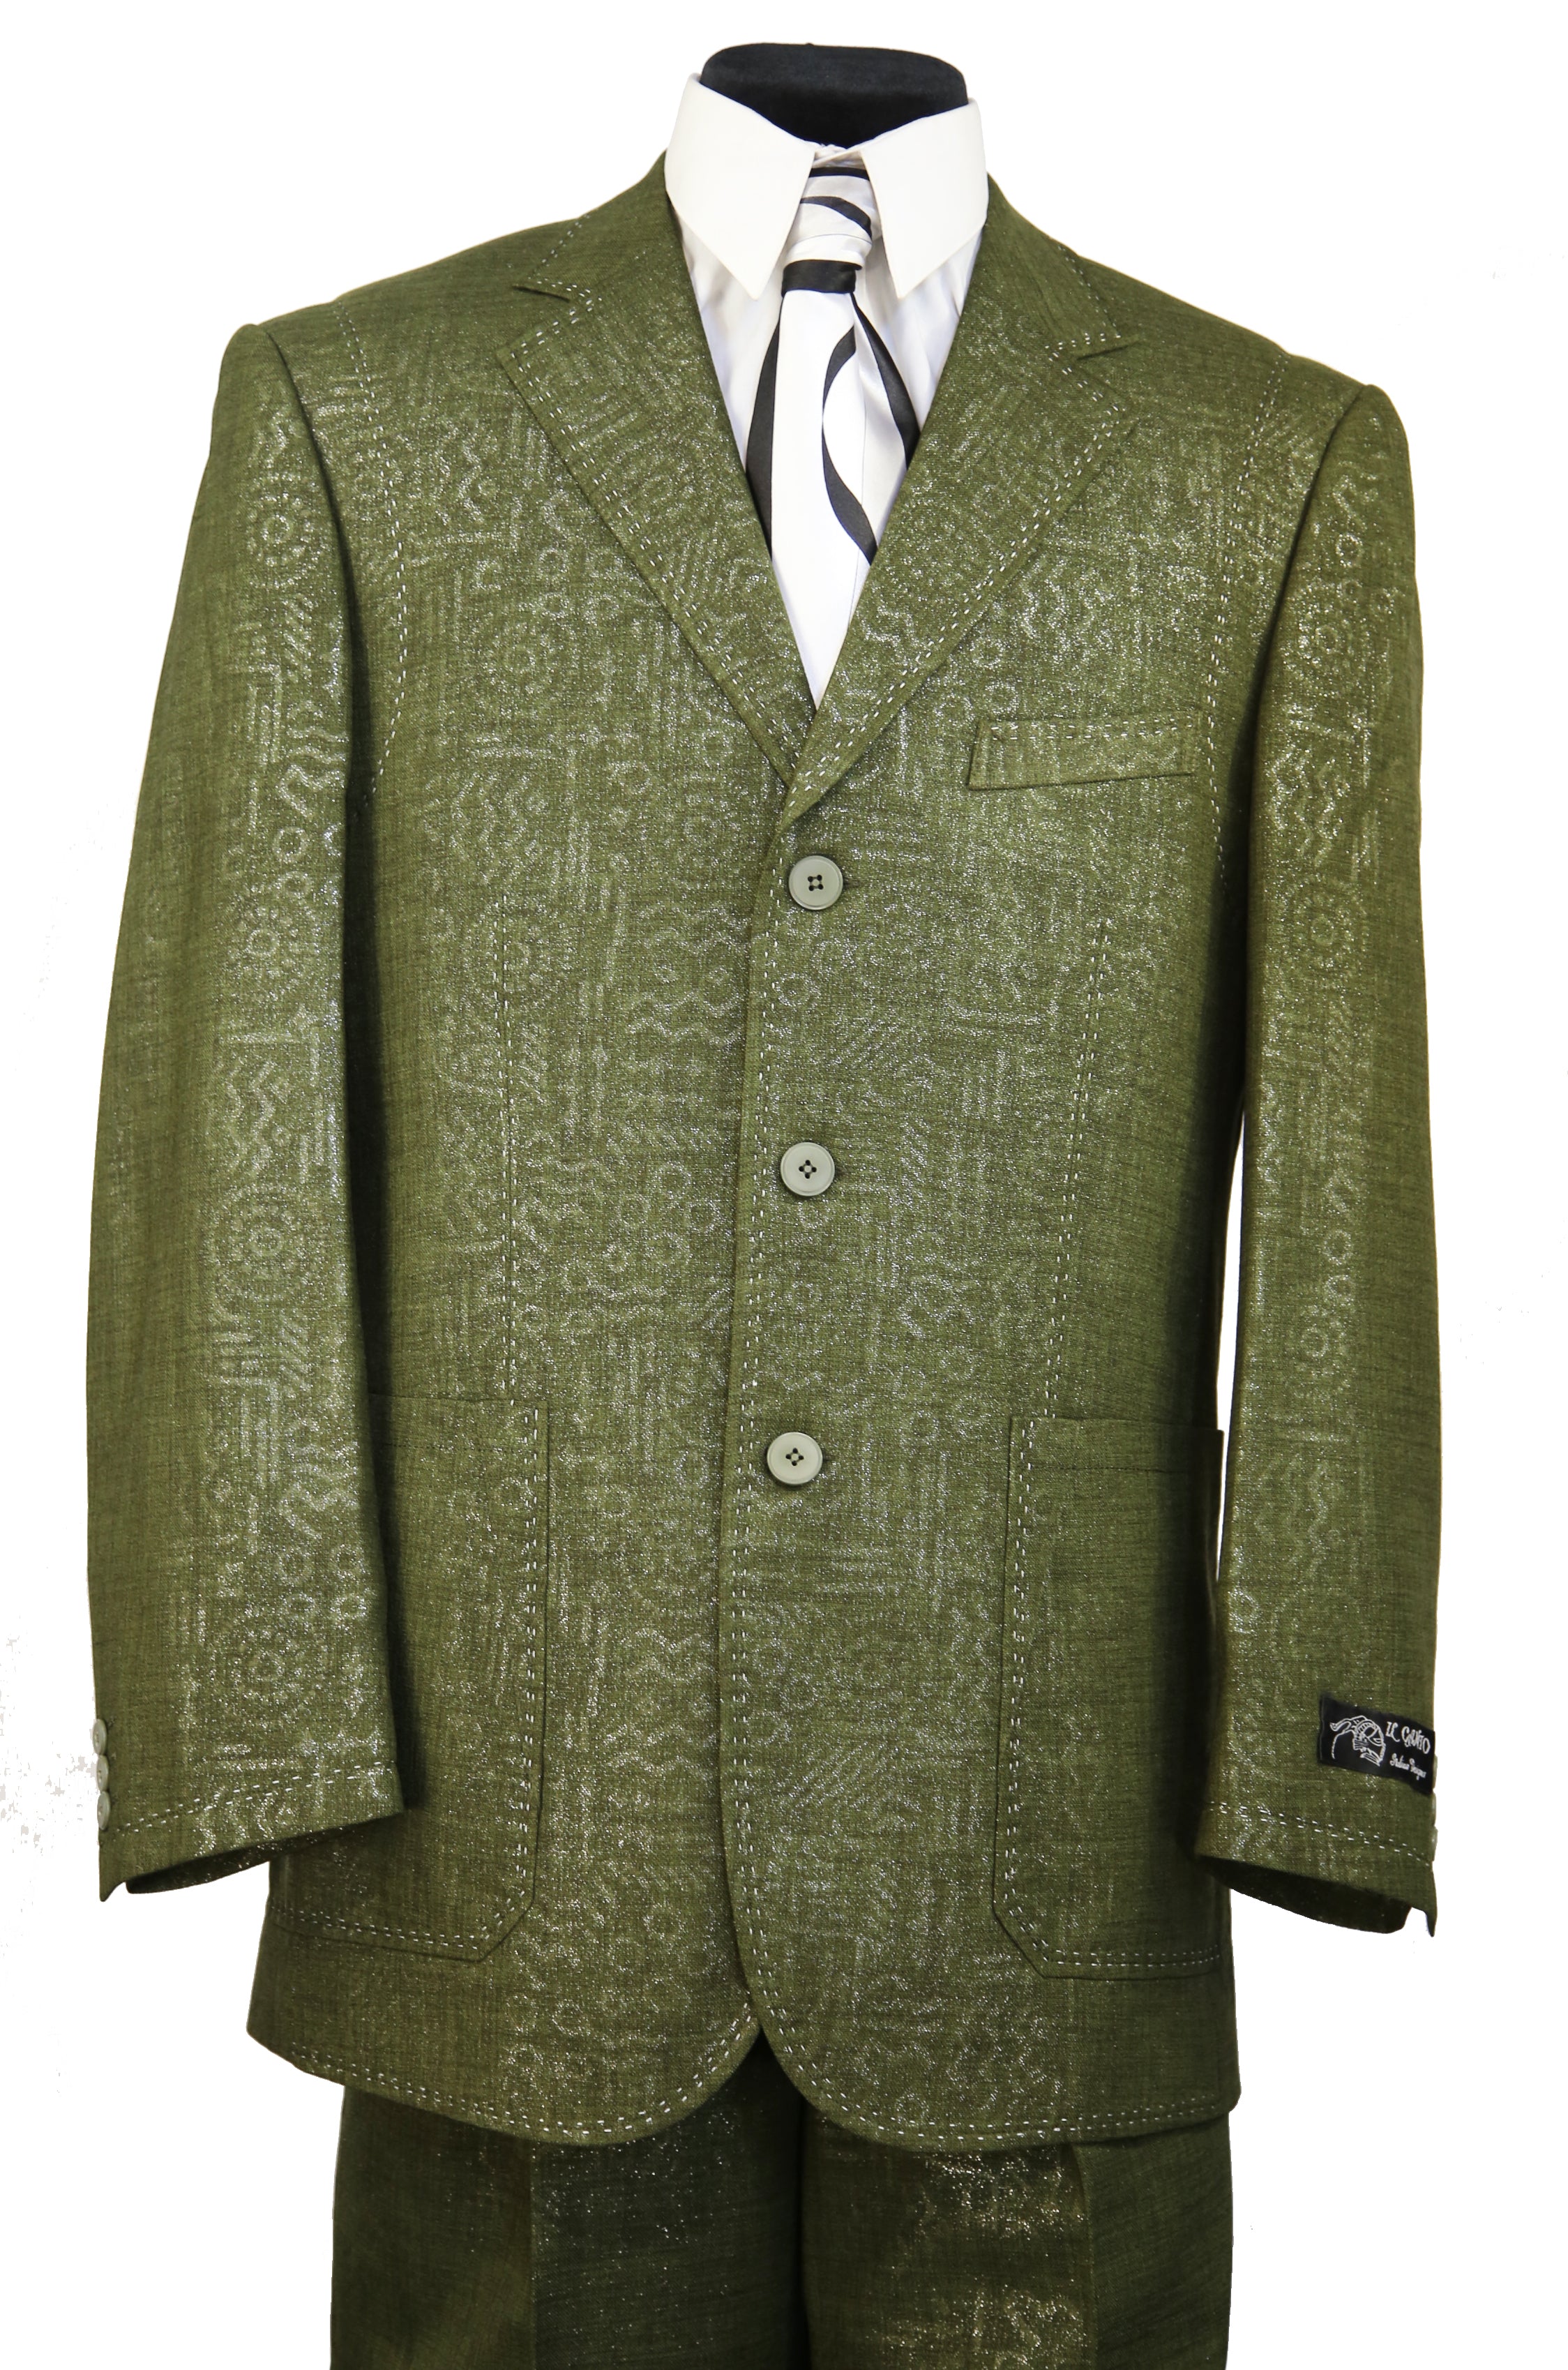 Primordial Shapes Emblazoned 2pc Zoot Suit Set - Olive w/ Stitch Accents